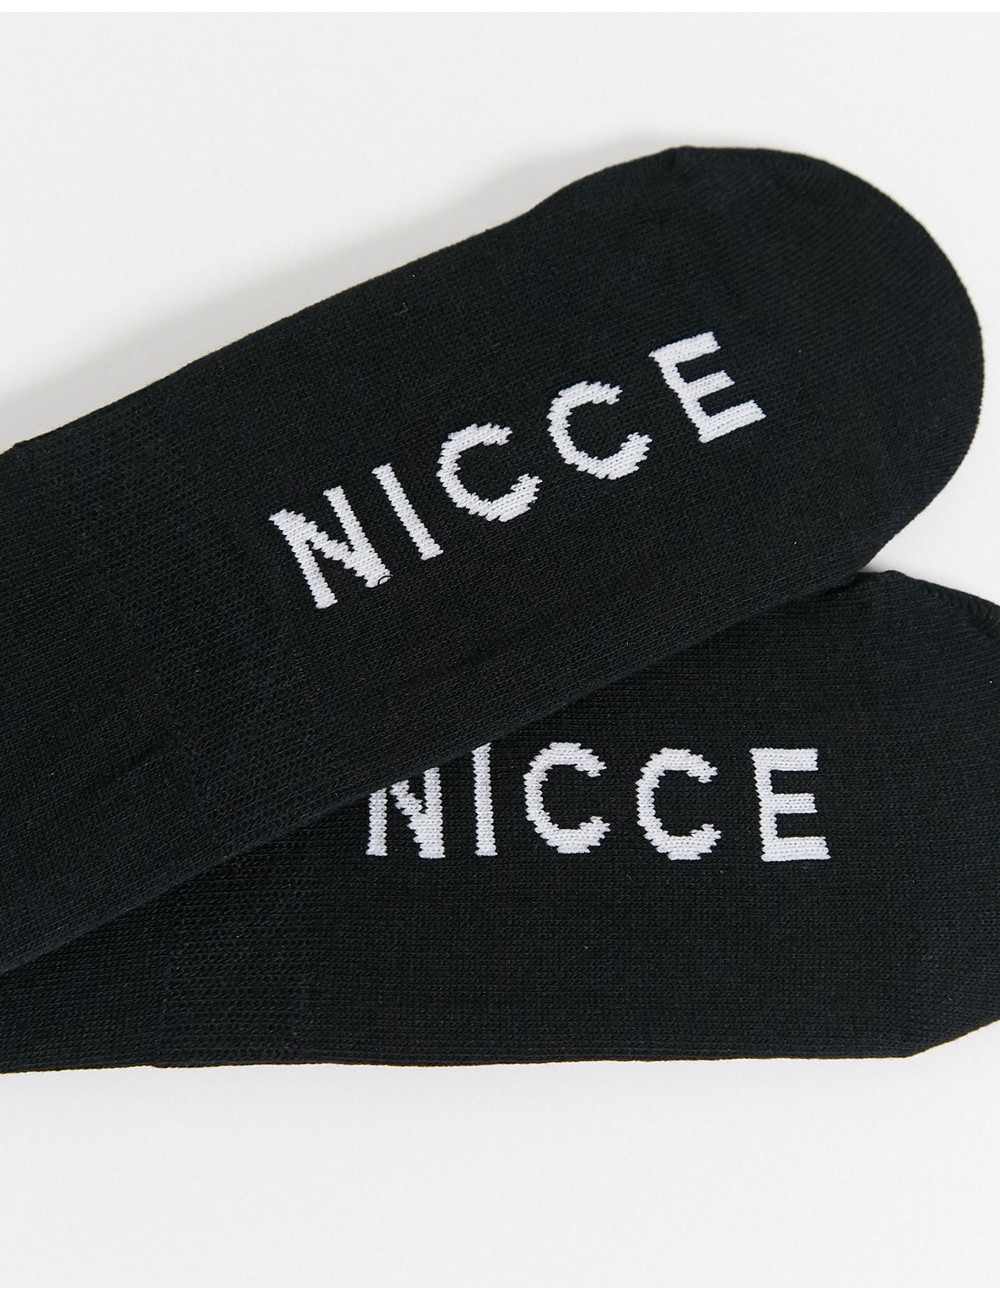 Nicce invisible socks in...